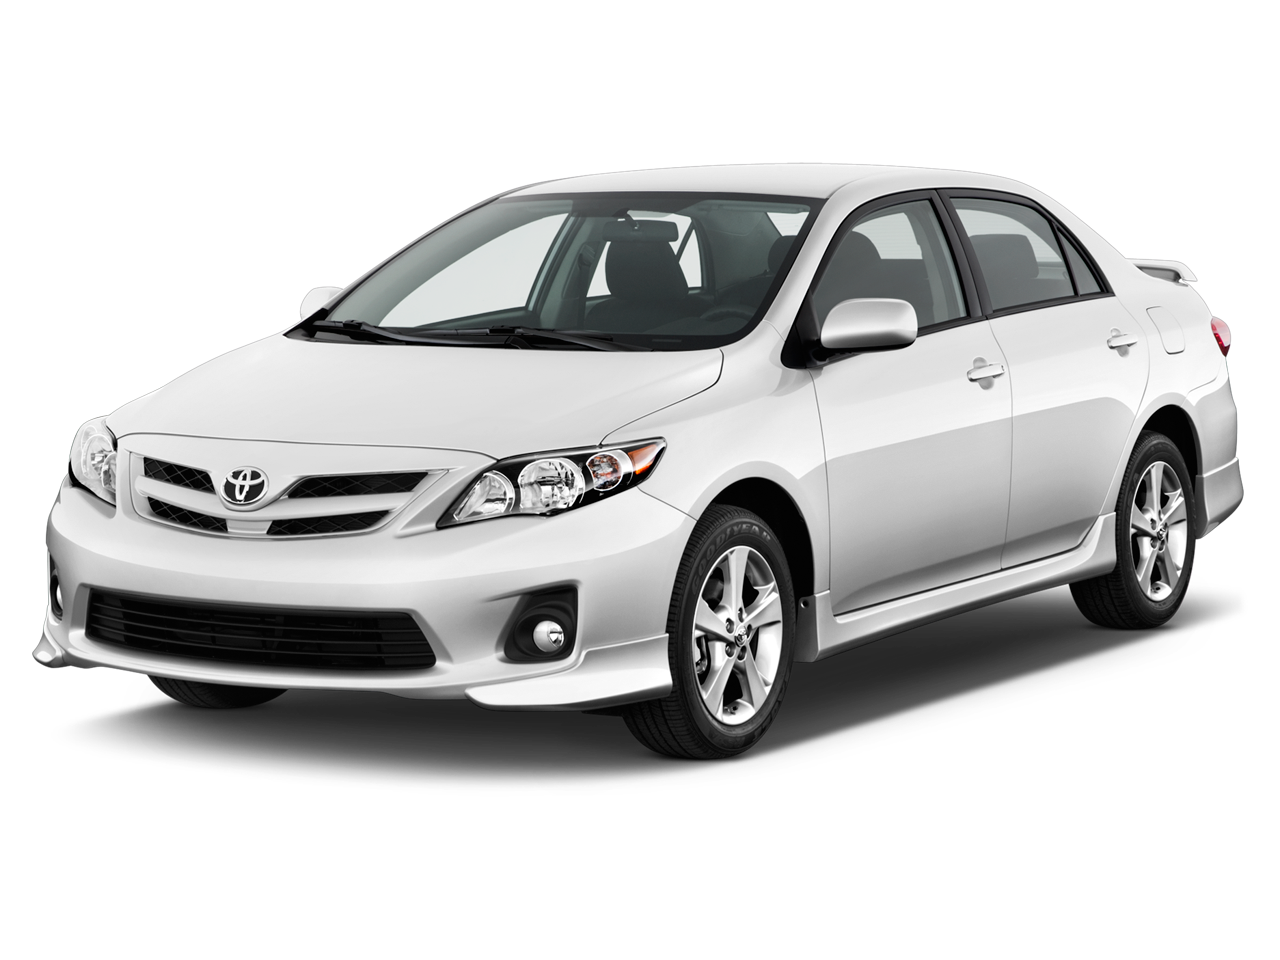 Toyota PNG image, free car image